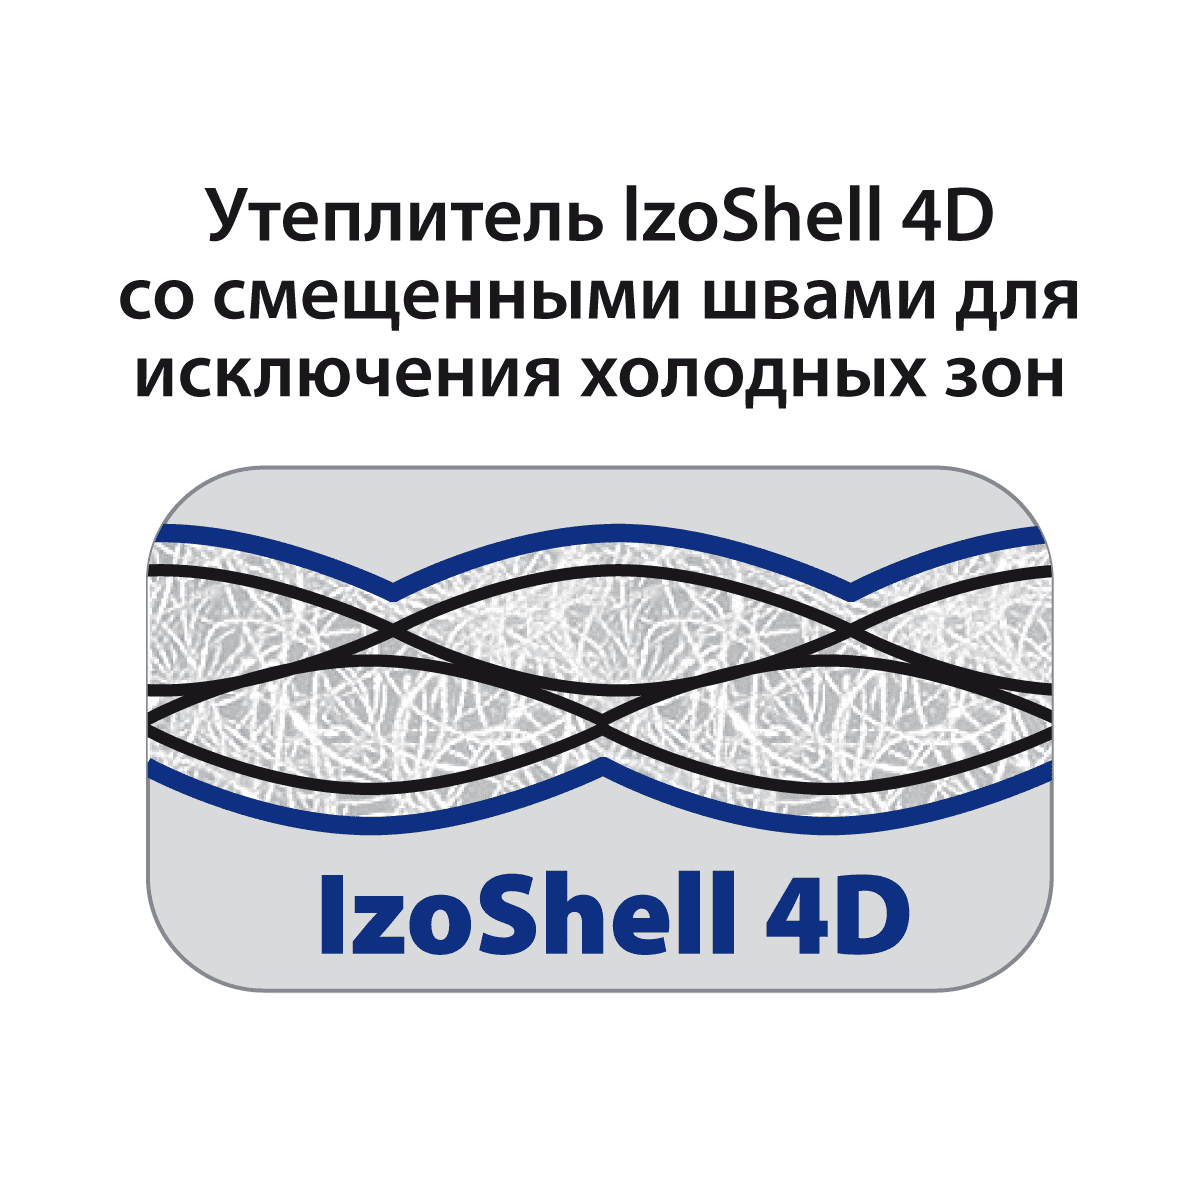 Izoshell 4D